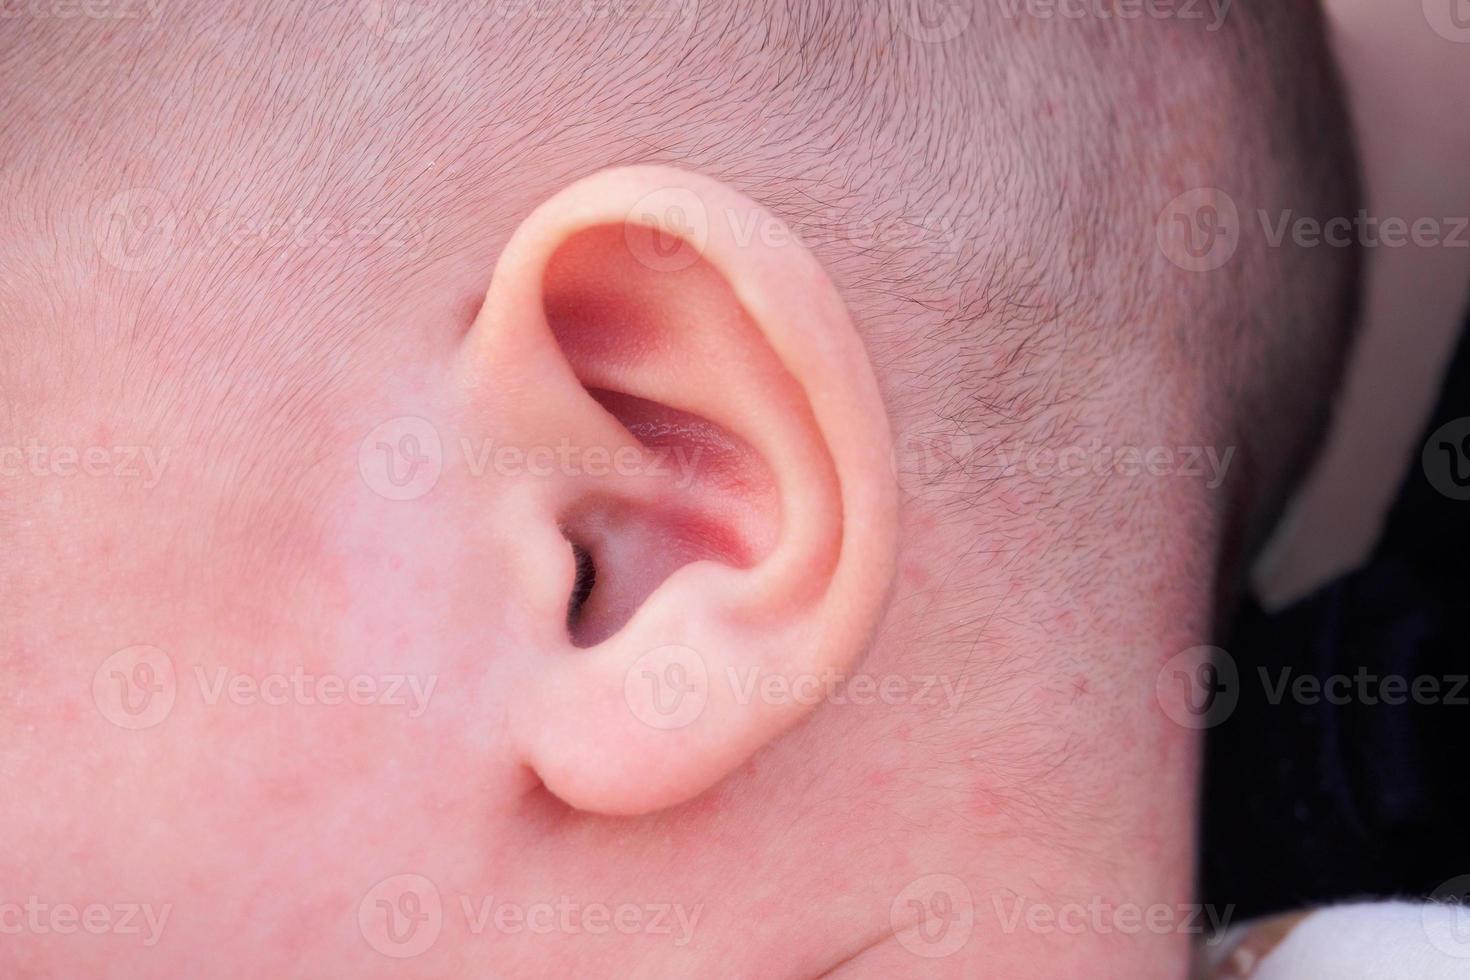 newborn baby ear close up photo